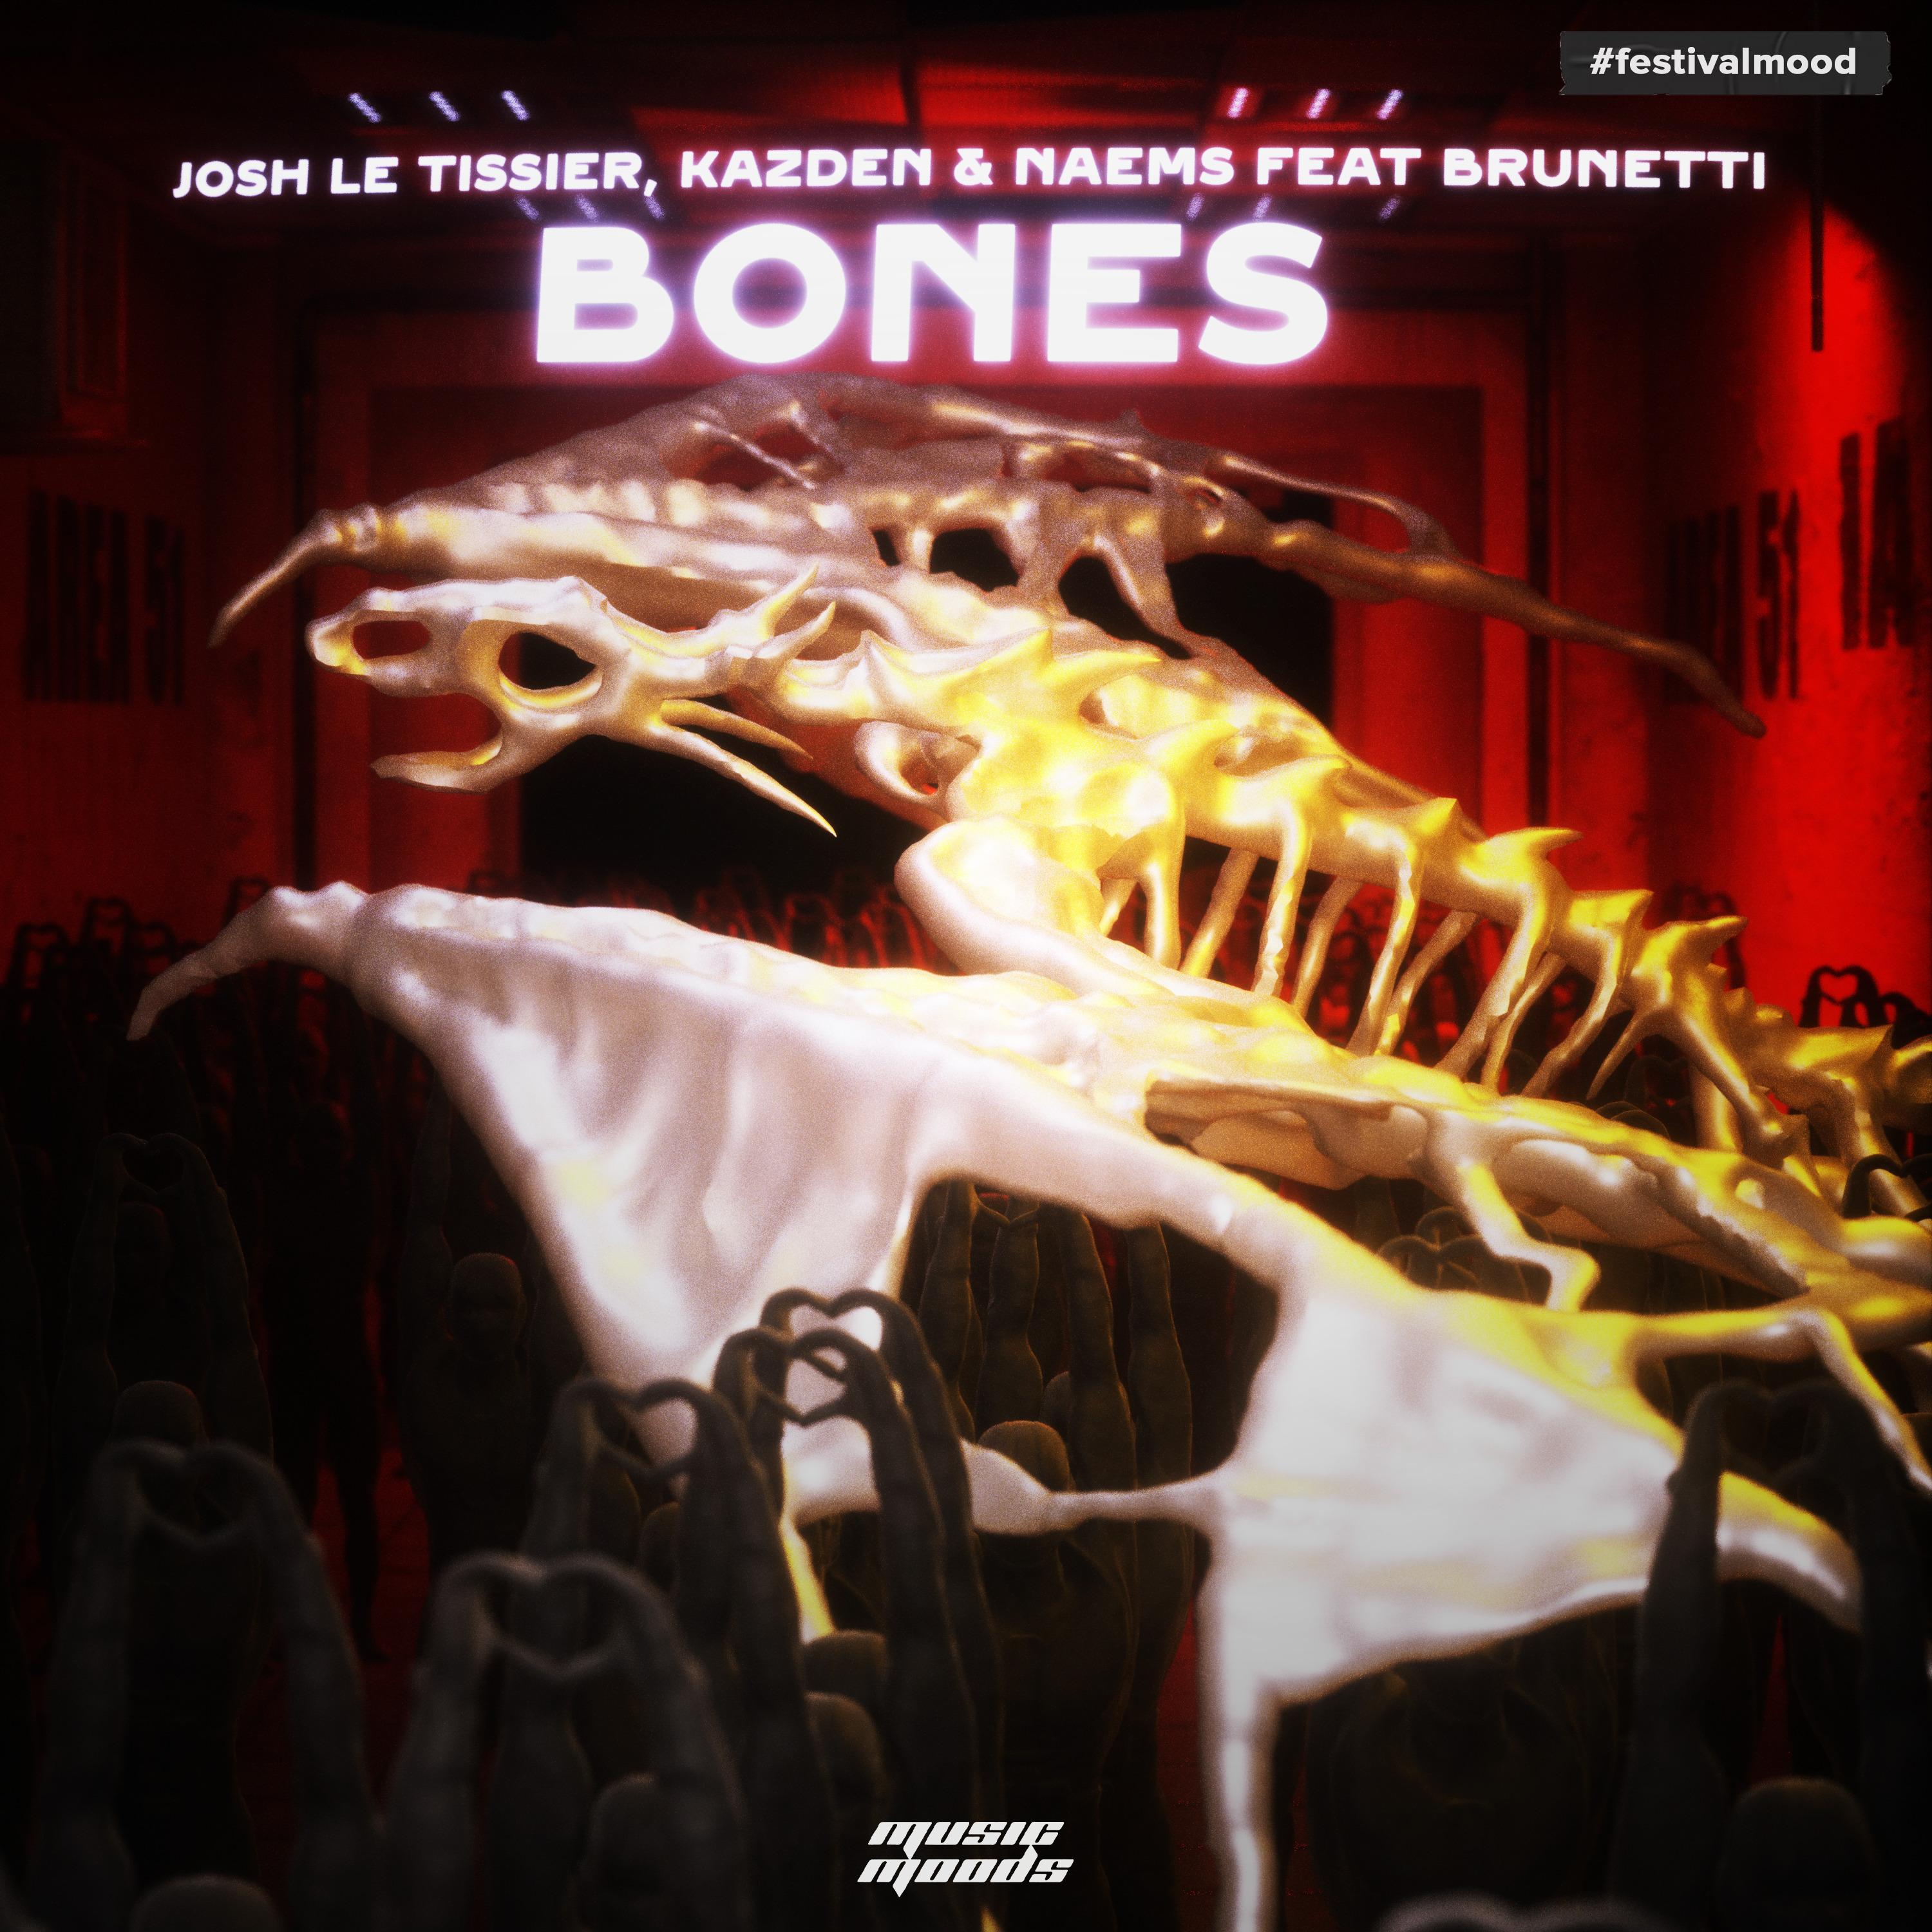 Josh Le Tissier - Bones (feat. Brunetti) ( Extended Mix)